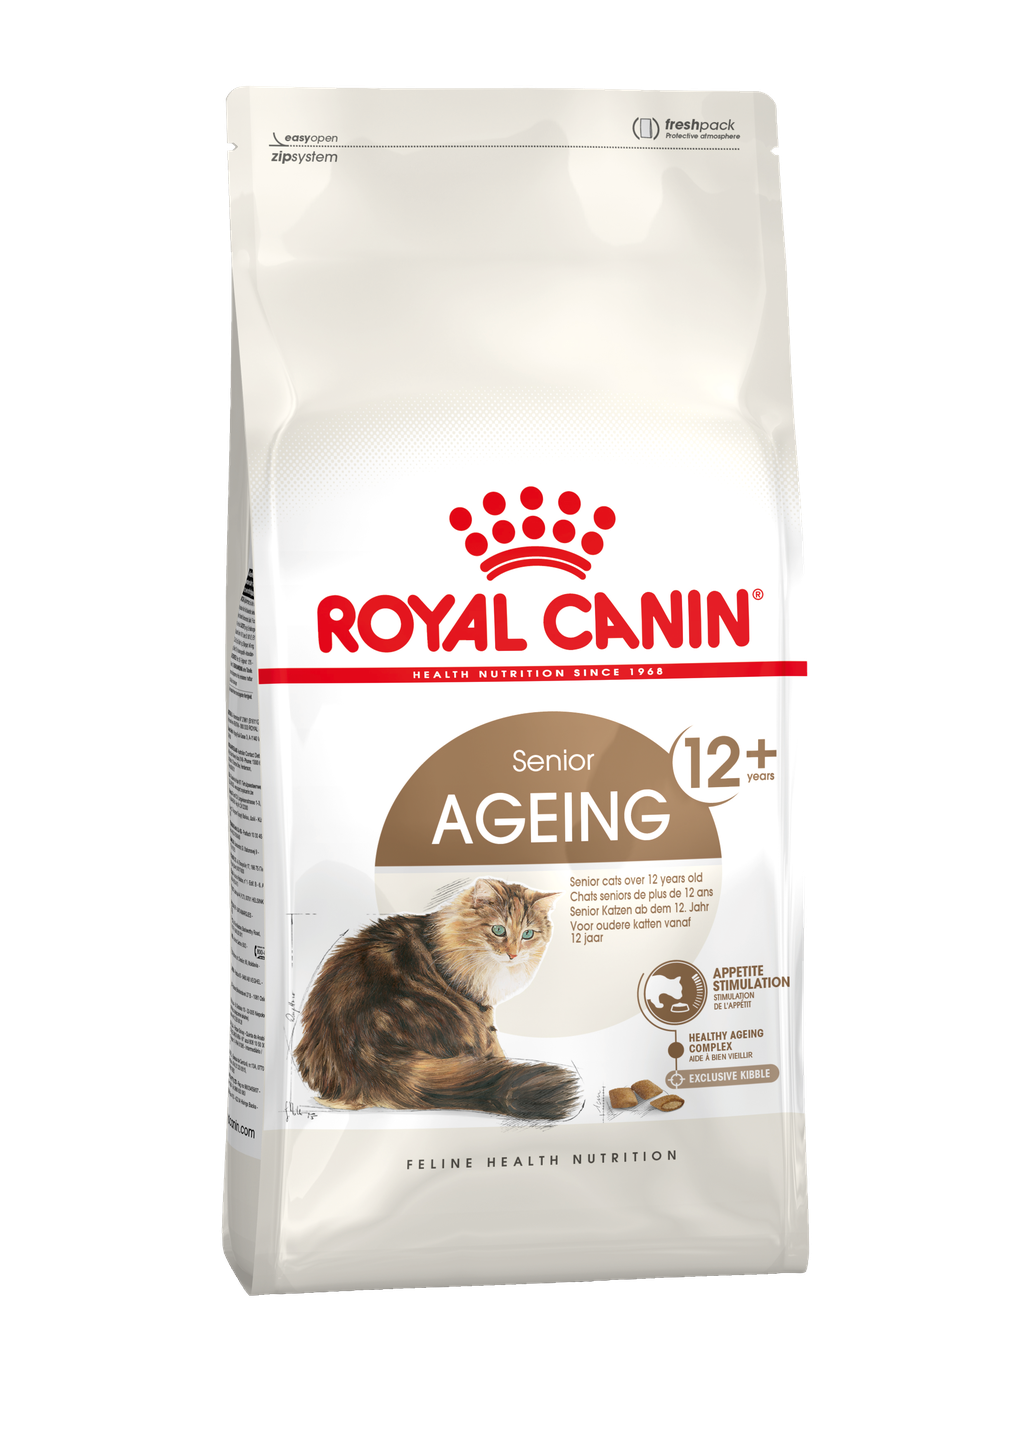 Port Mannelijkheid krokodil Ageing 12+: aangepaste voeding voor uw kat - Voeding - ROYAL CANIN©